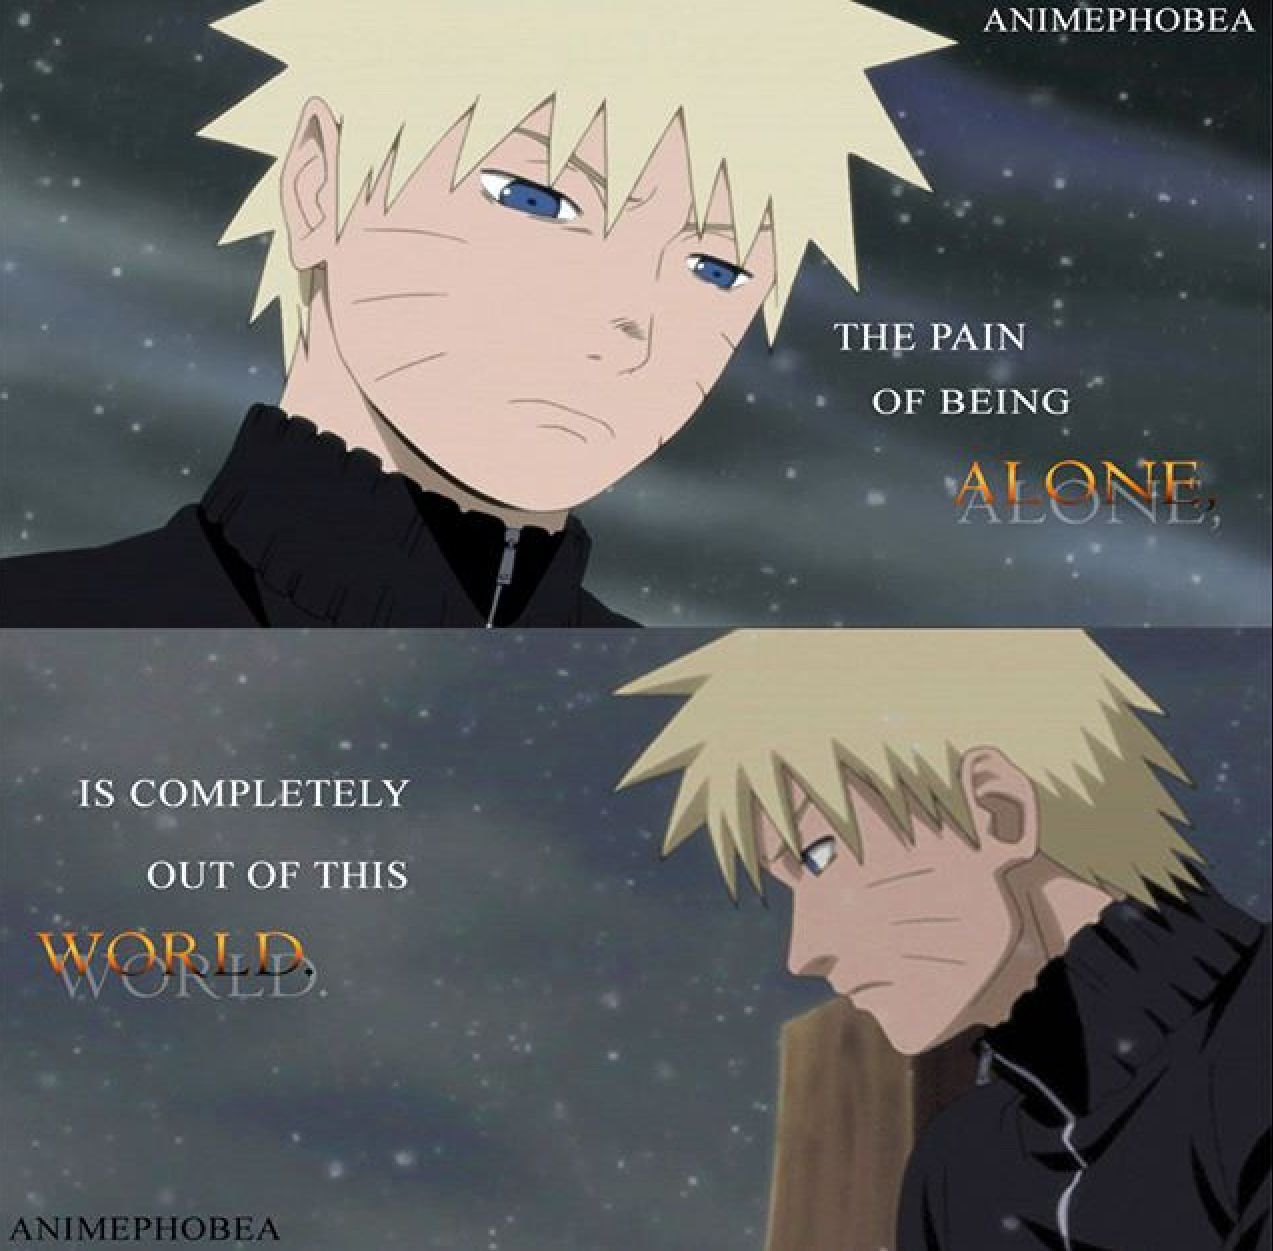 Deep Naruto Quotes Wallpaper. Naruto quotes, Naruto facts, Anime quotes